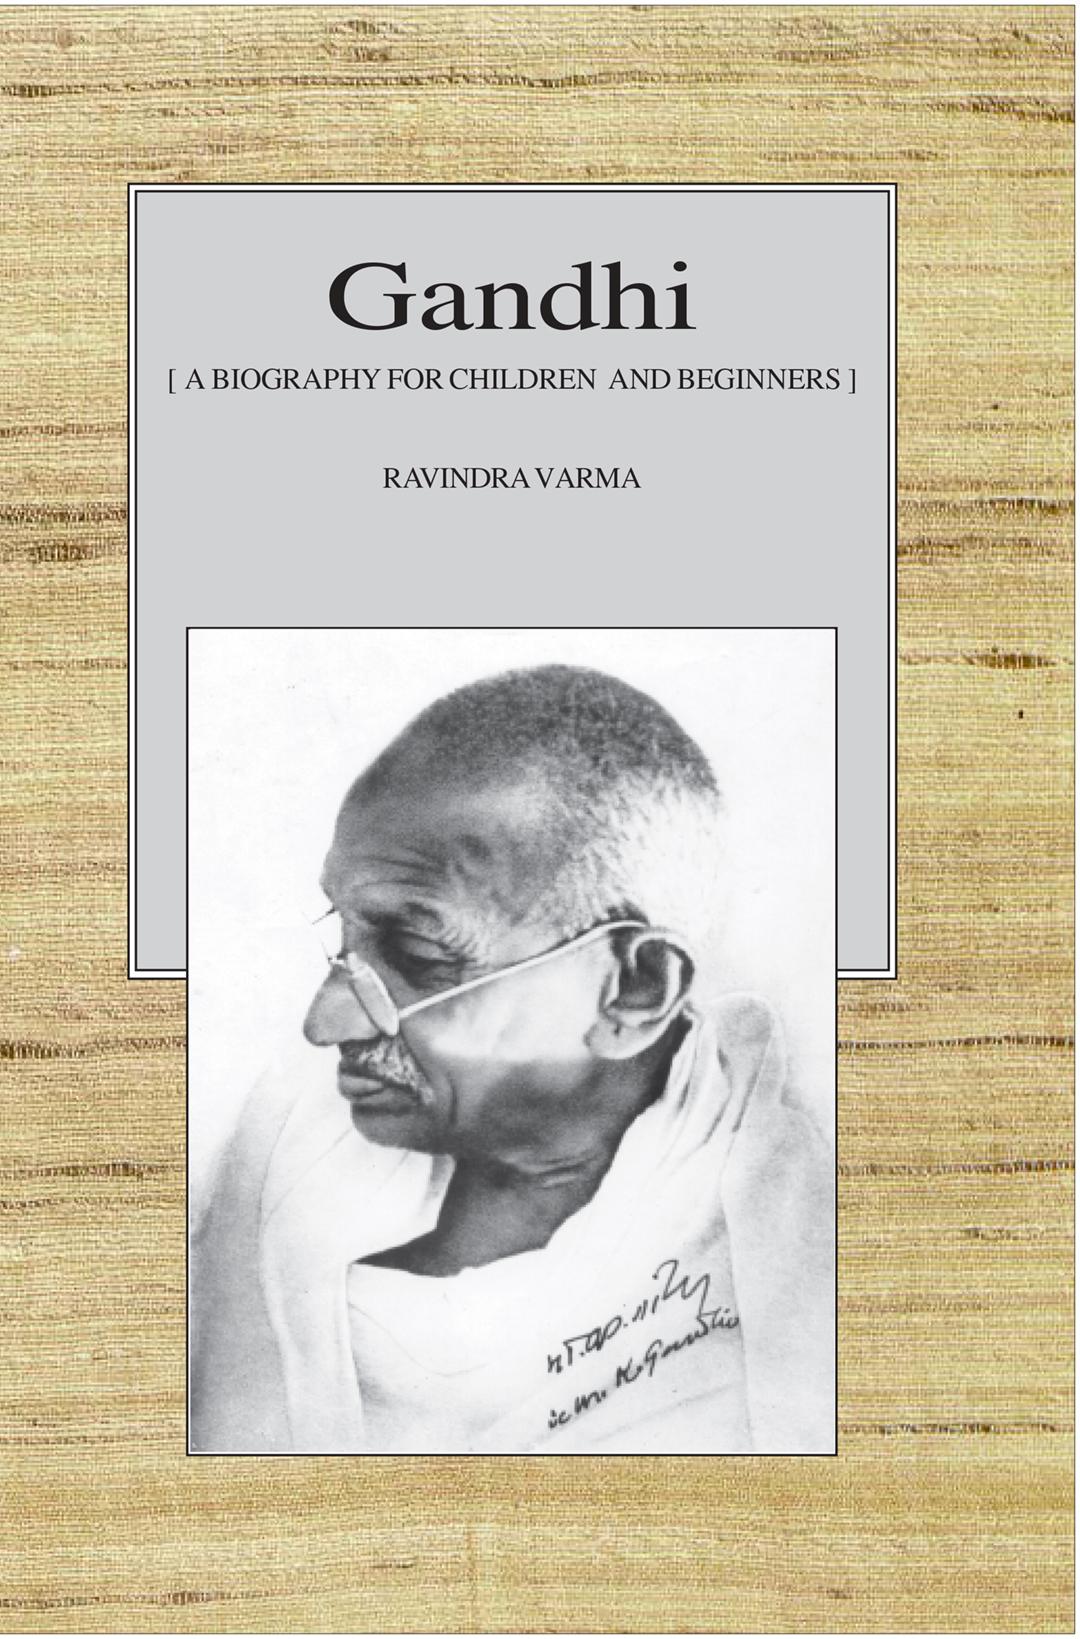 biography of gandhi book